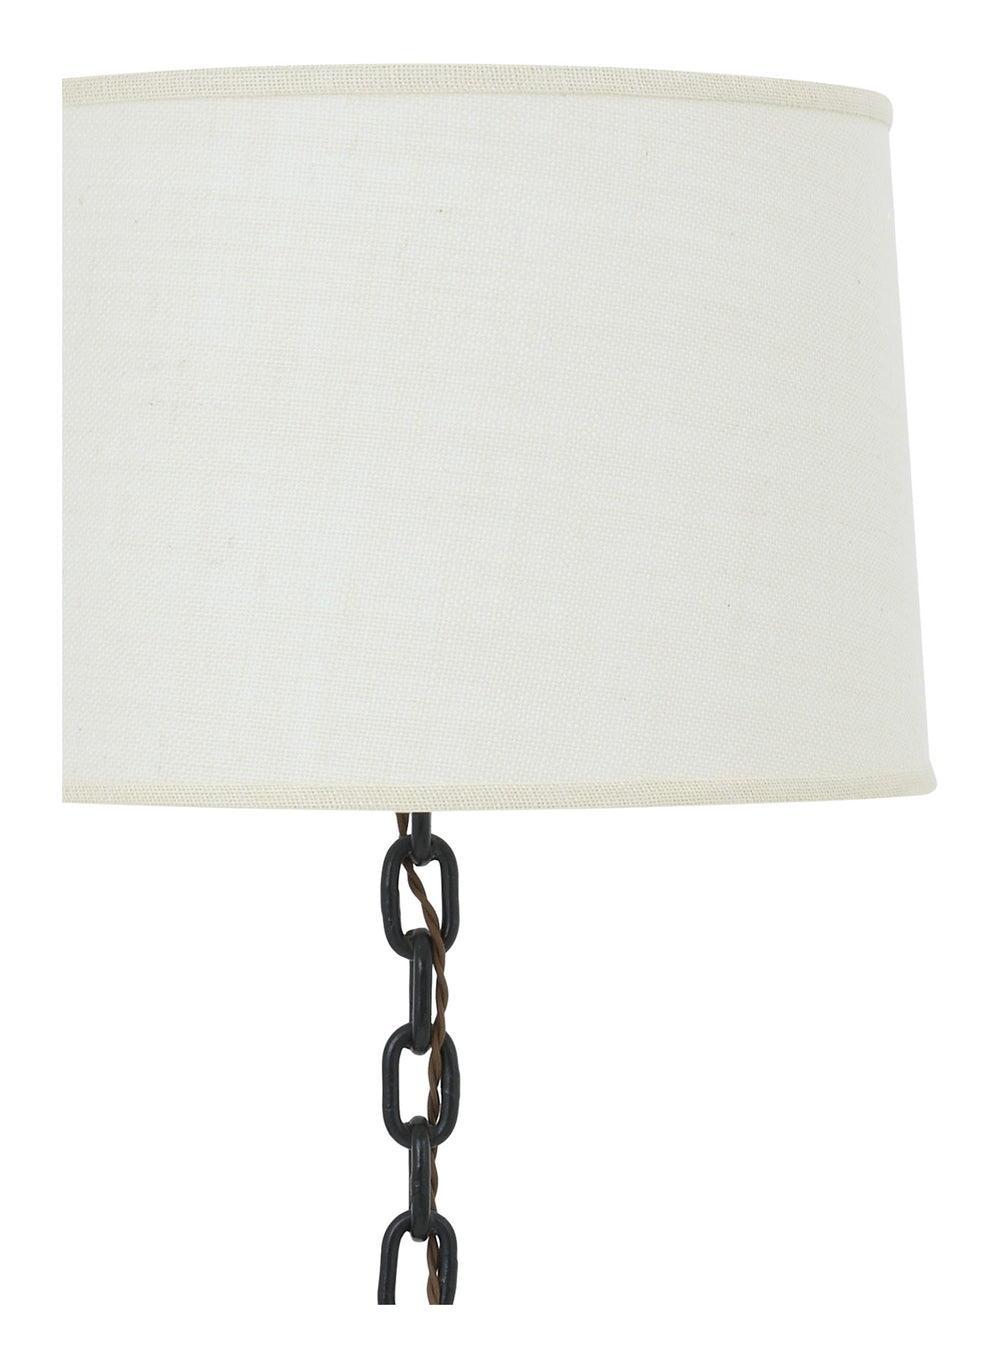 Vintage Chain Floor Lamp